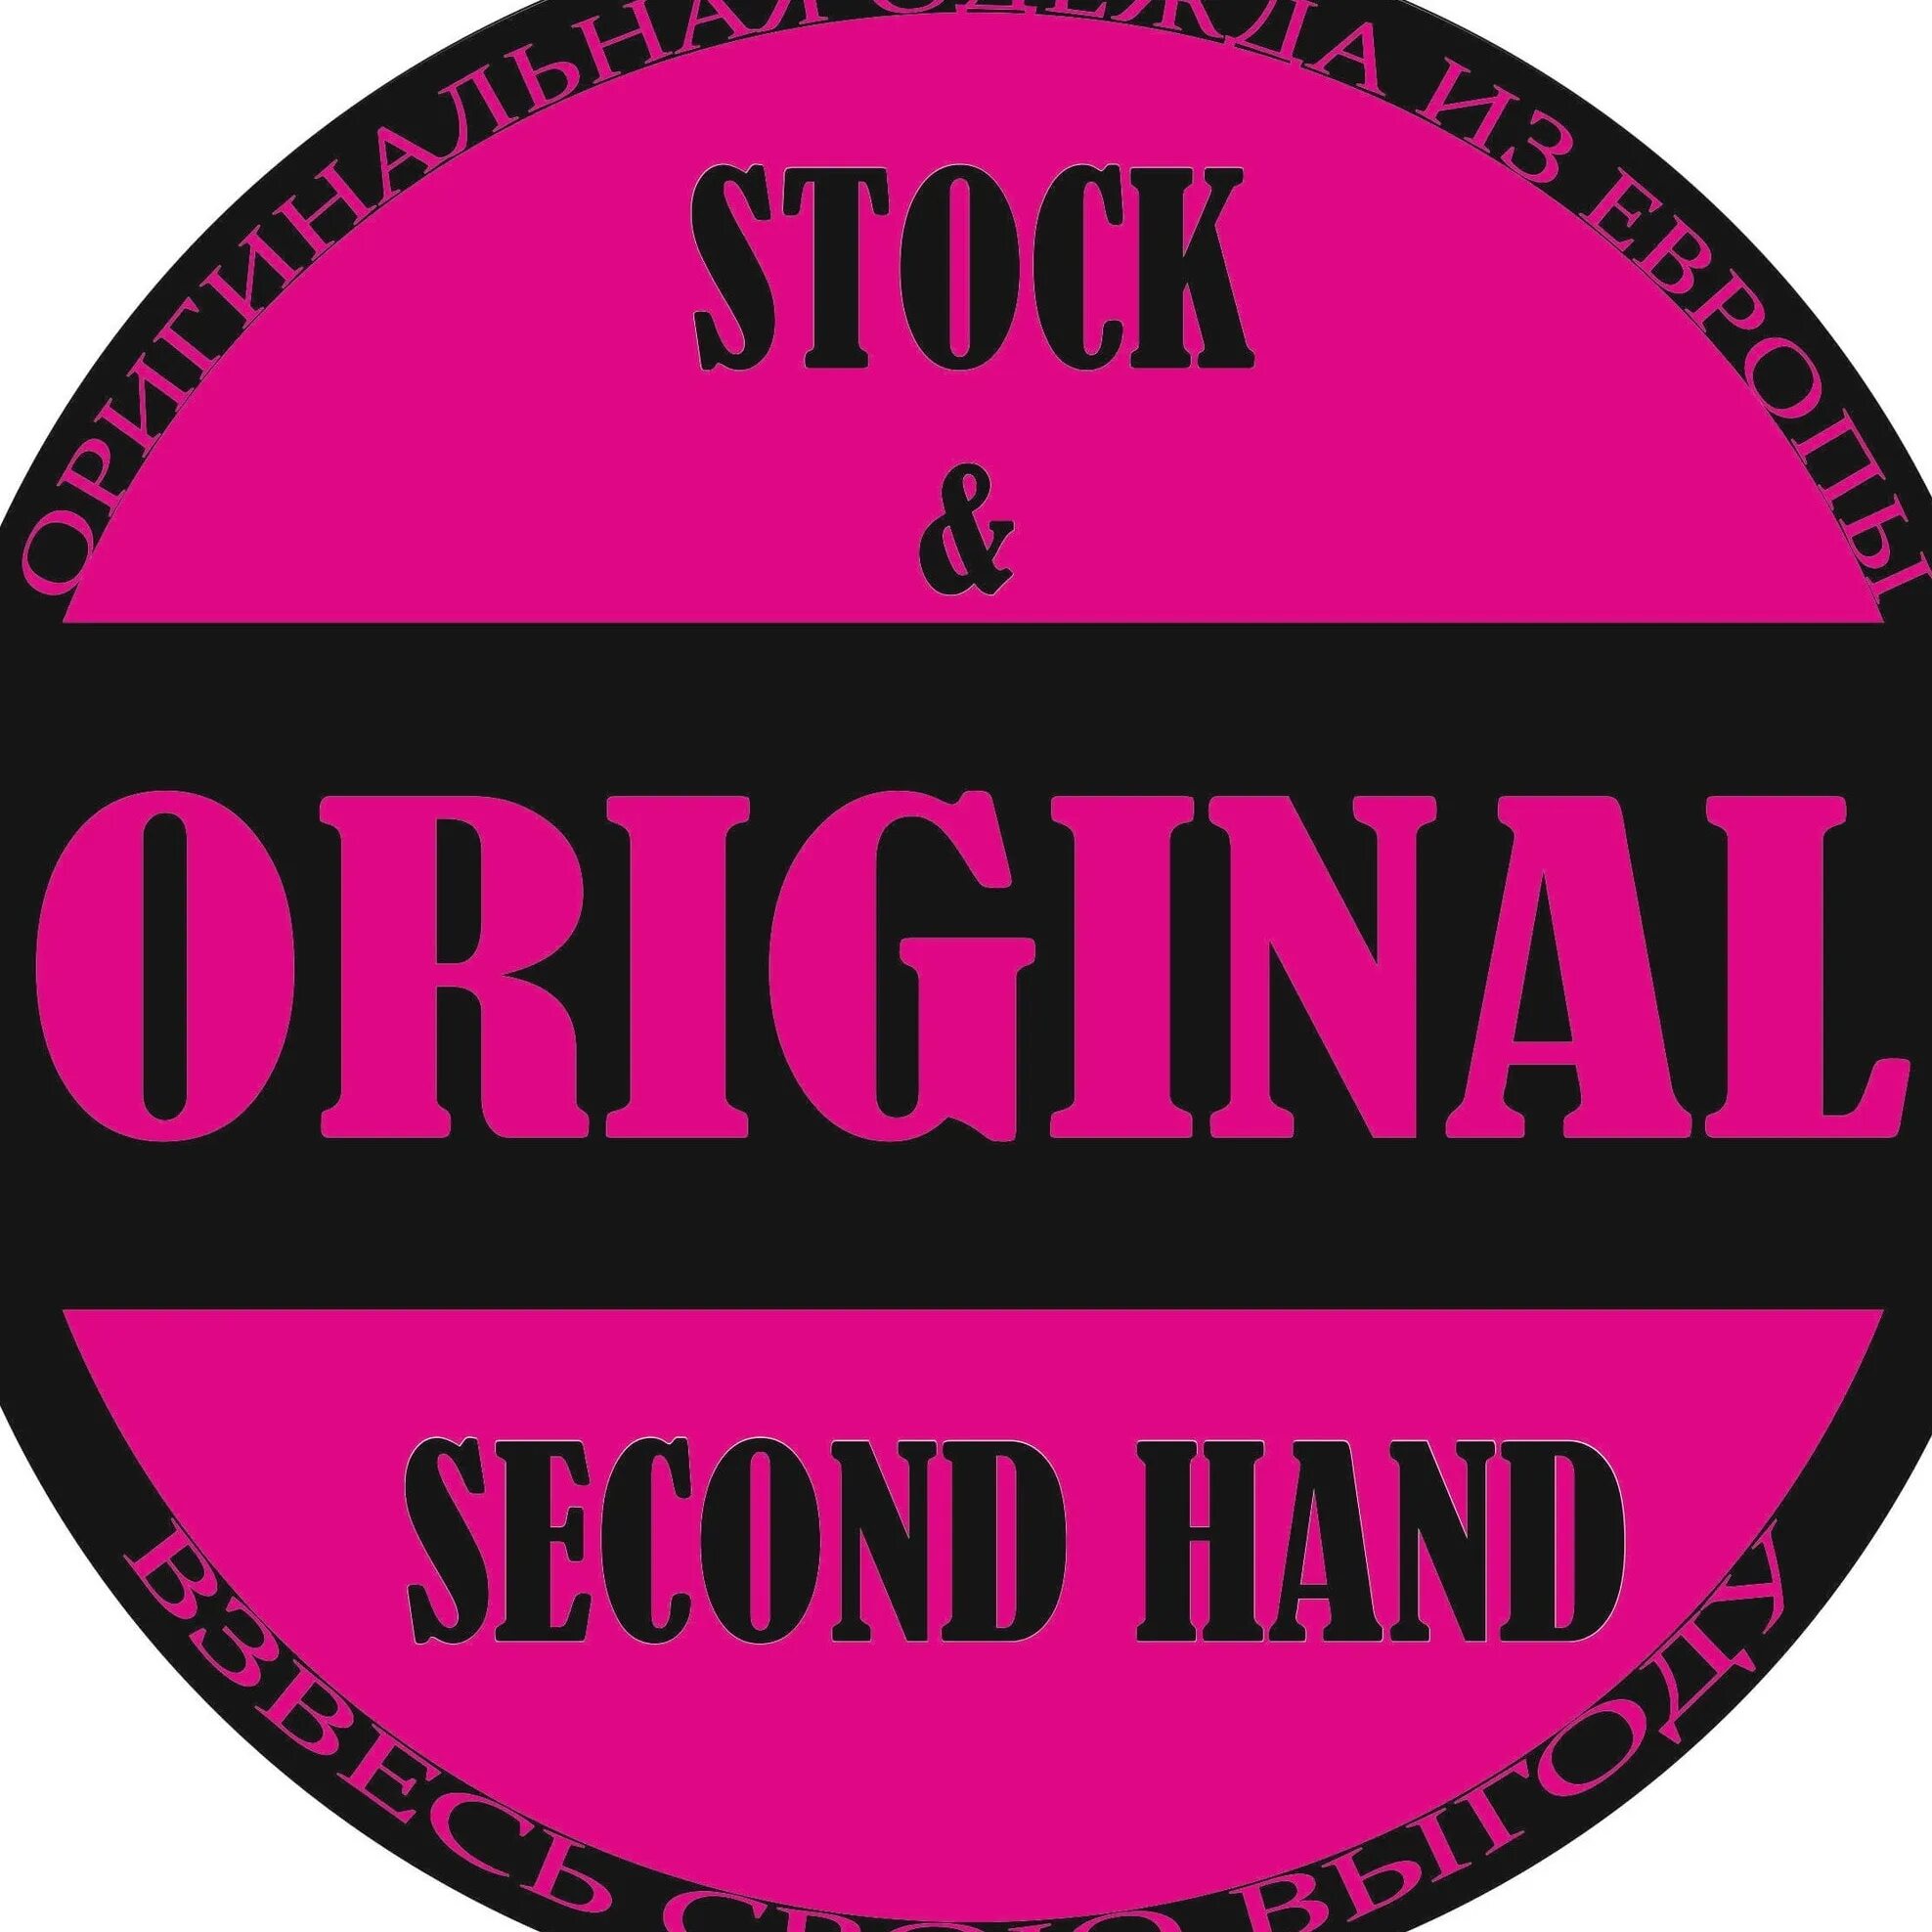 Second секунда. Stock second. Секонд хенд логотип. Секонд надпись. Second hand надпись.